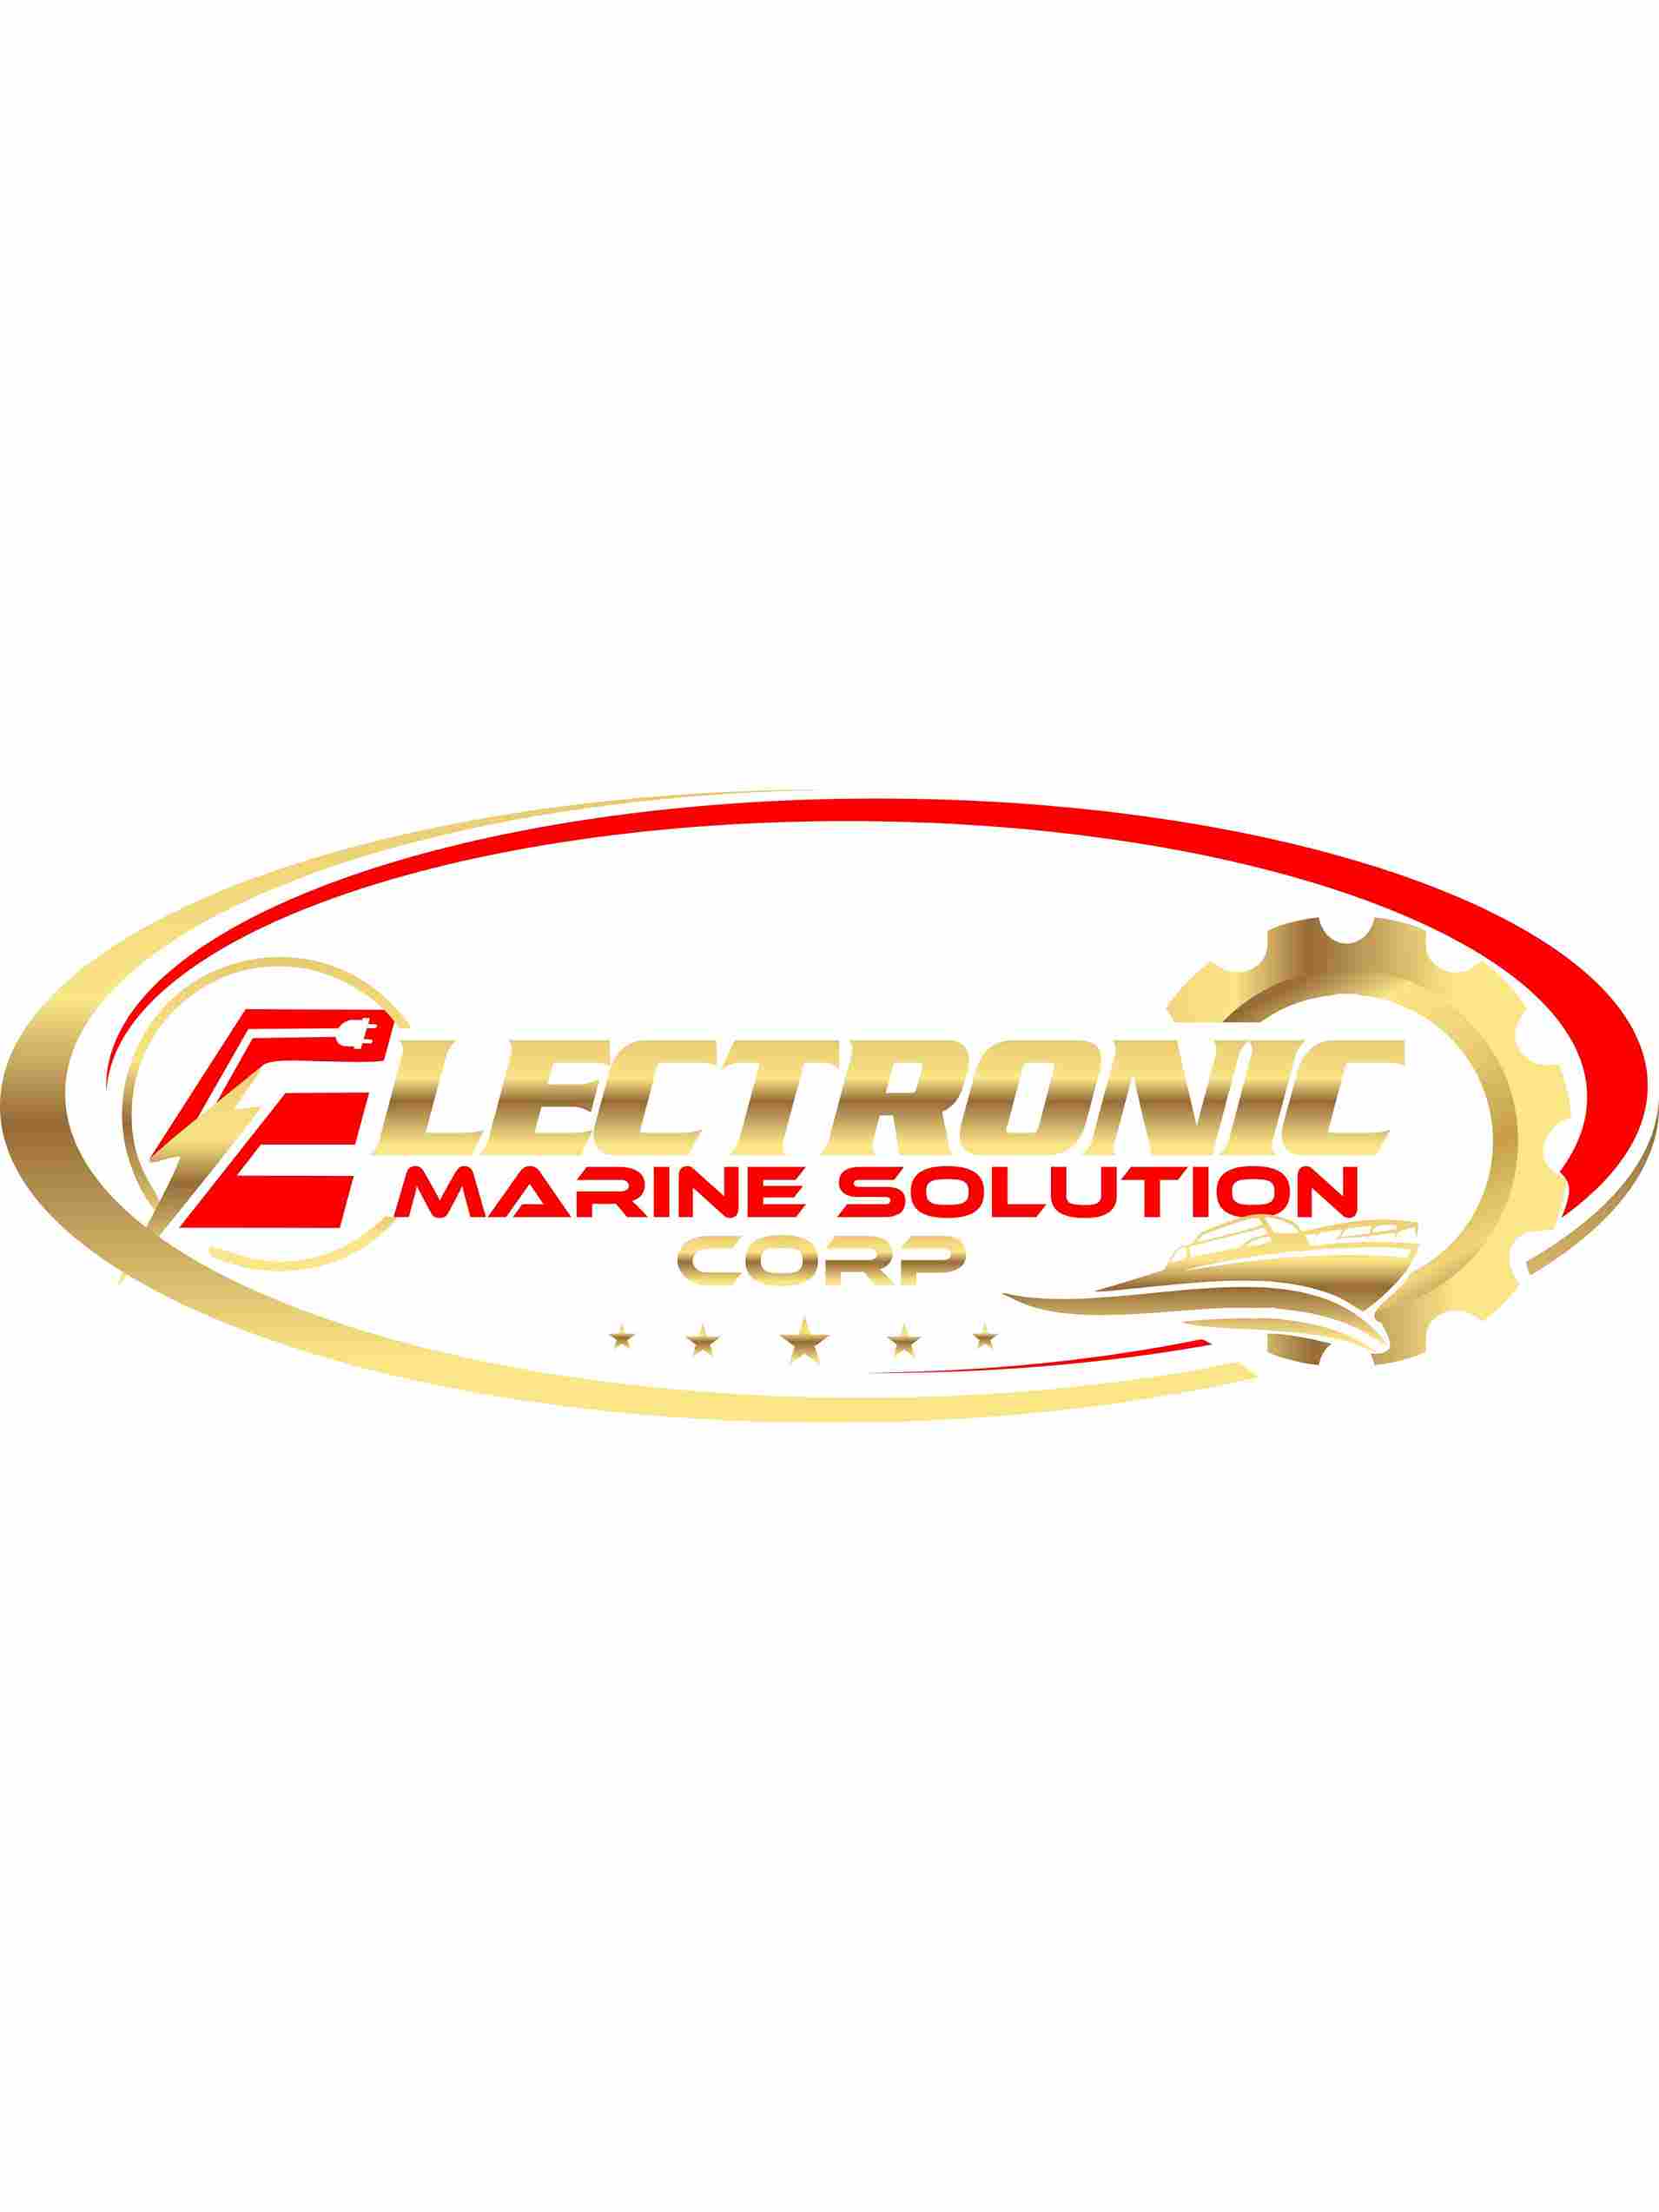 Electronic Marine Solution